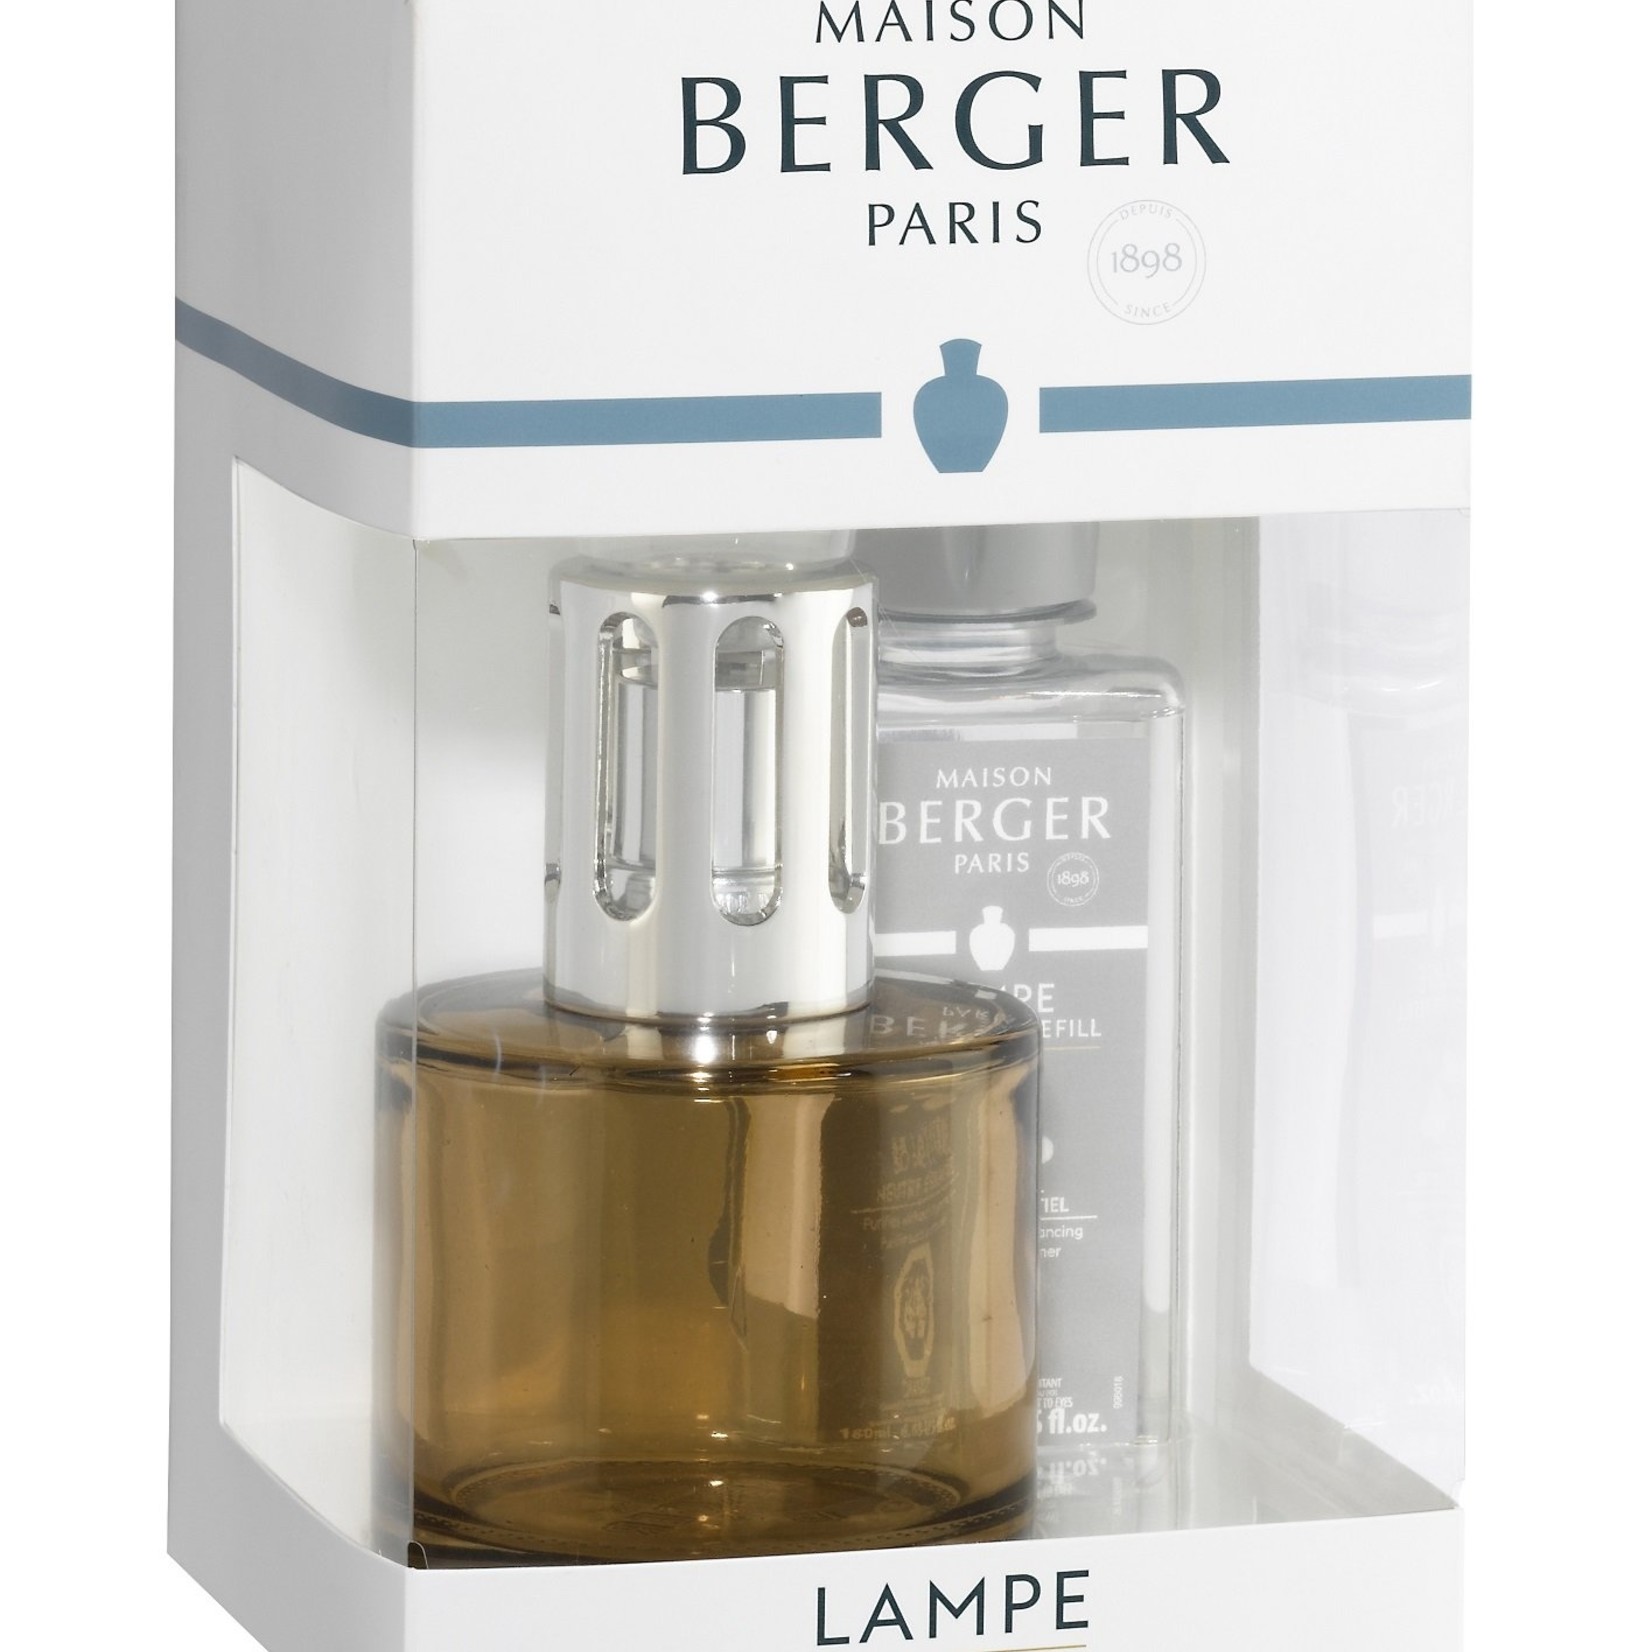 Lampe Berger Home Fragrance, 33.8 oz So Neutral 